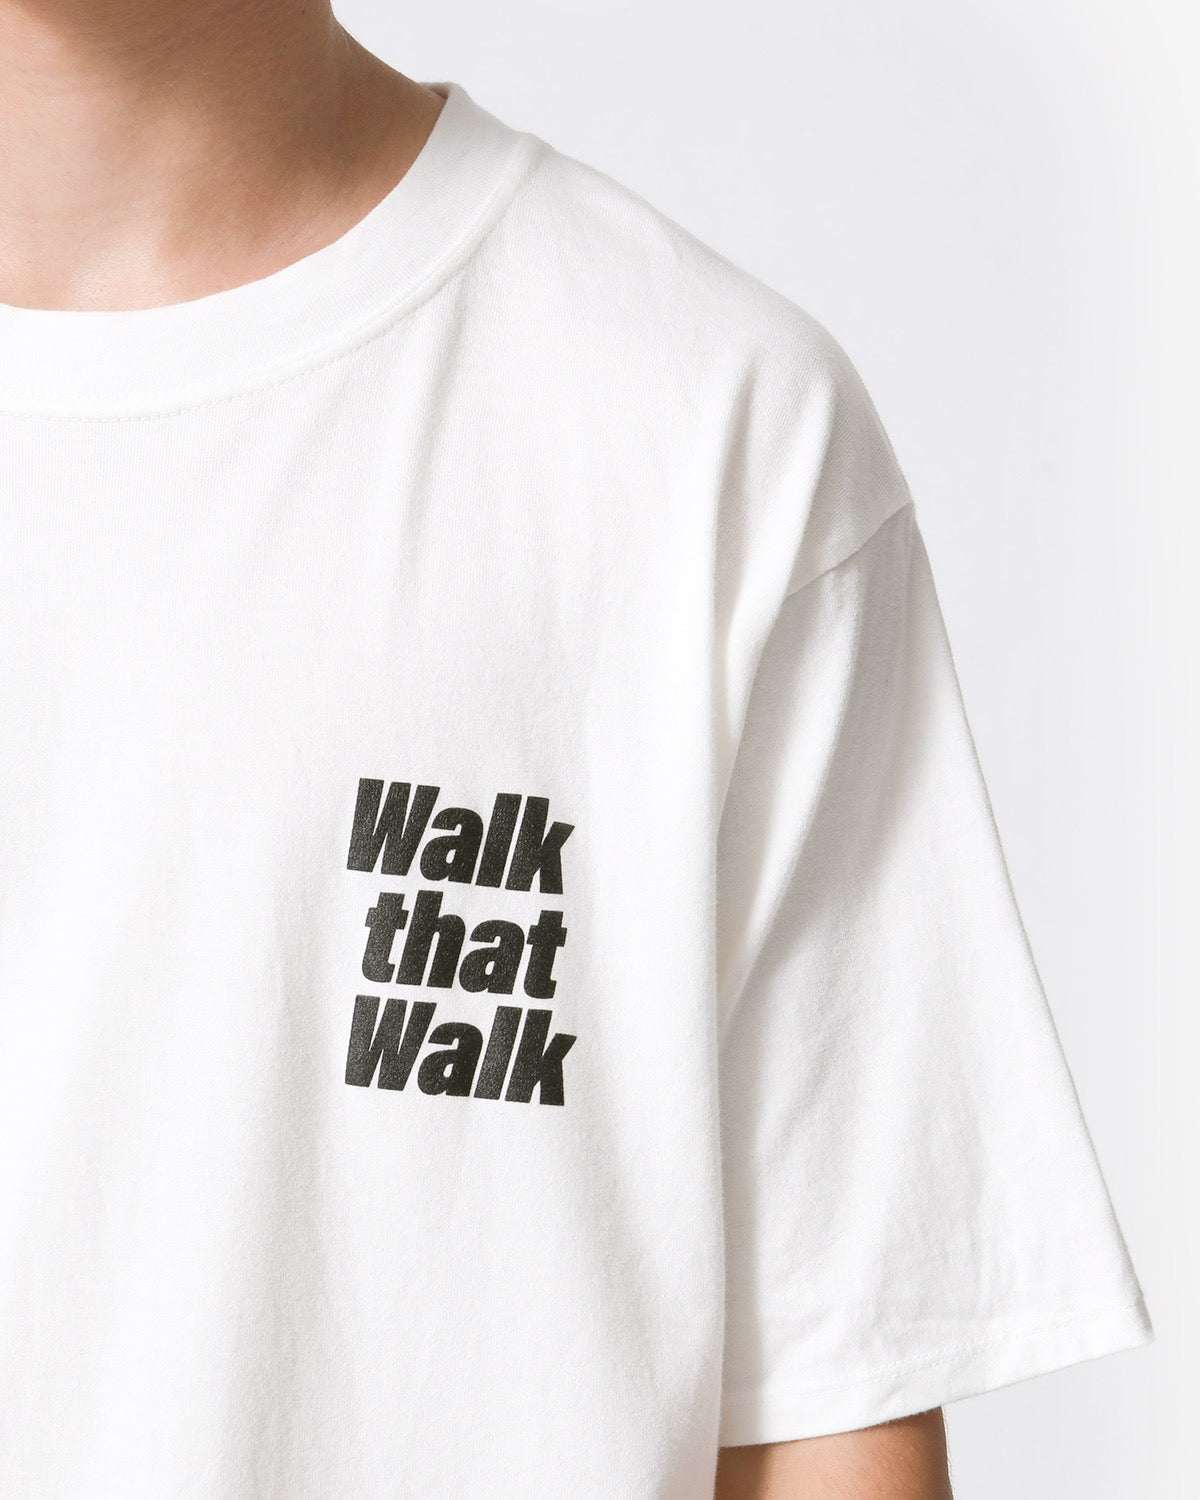 DWELLER S/S TEE "WALK THAT WALK"